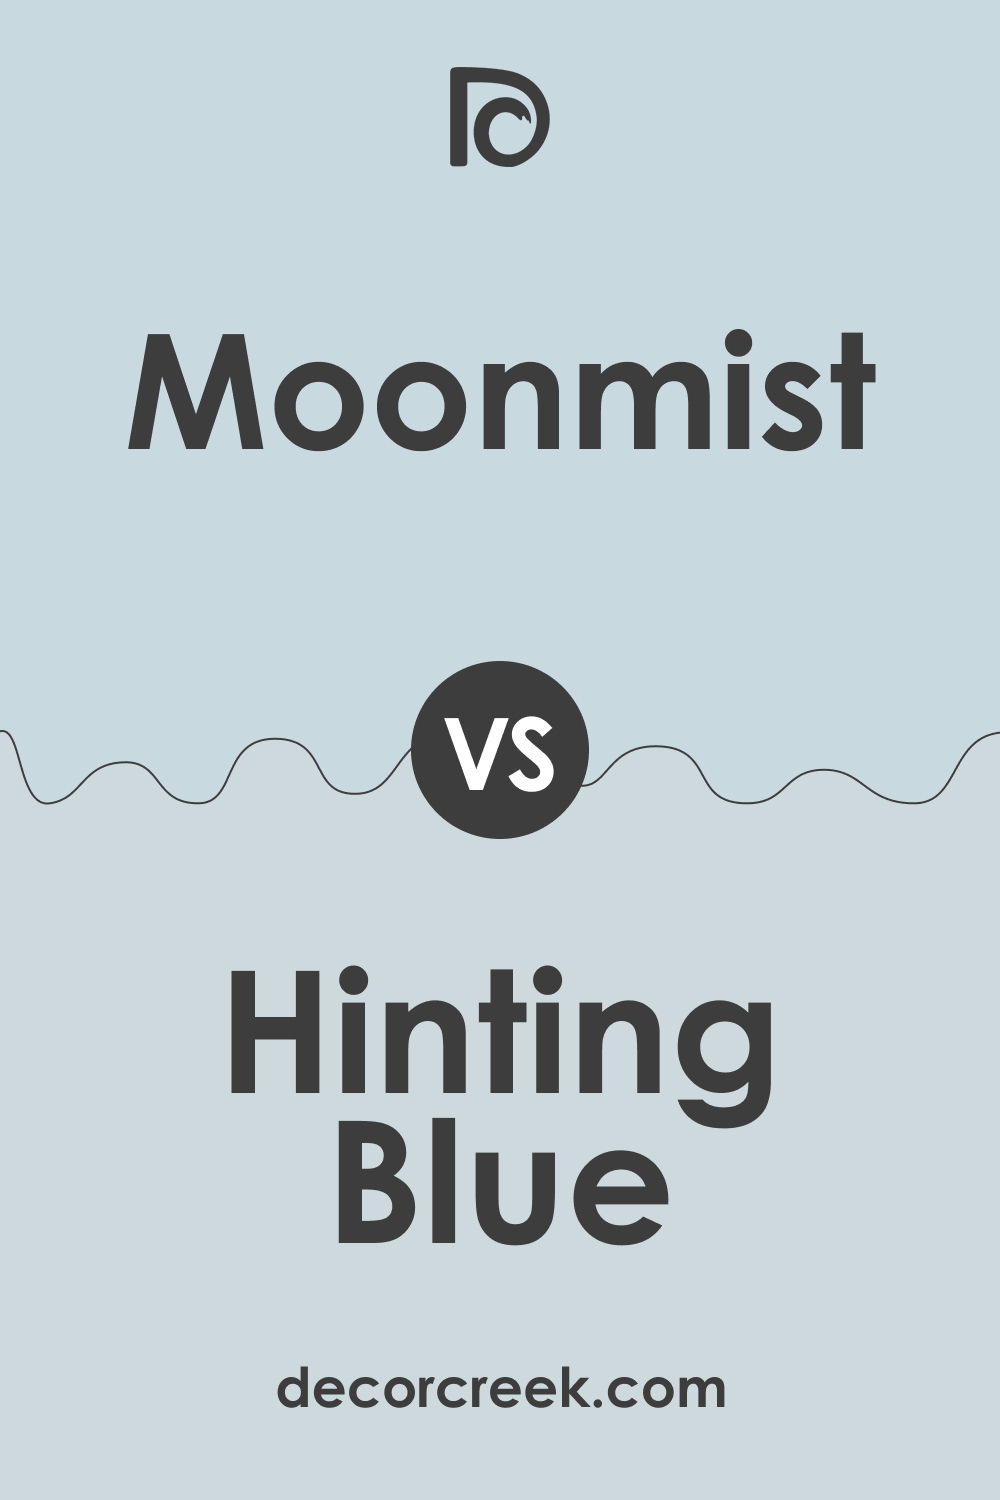 Moonmist vs Hinting Blue